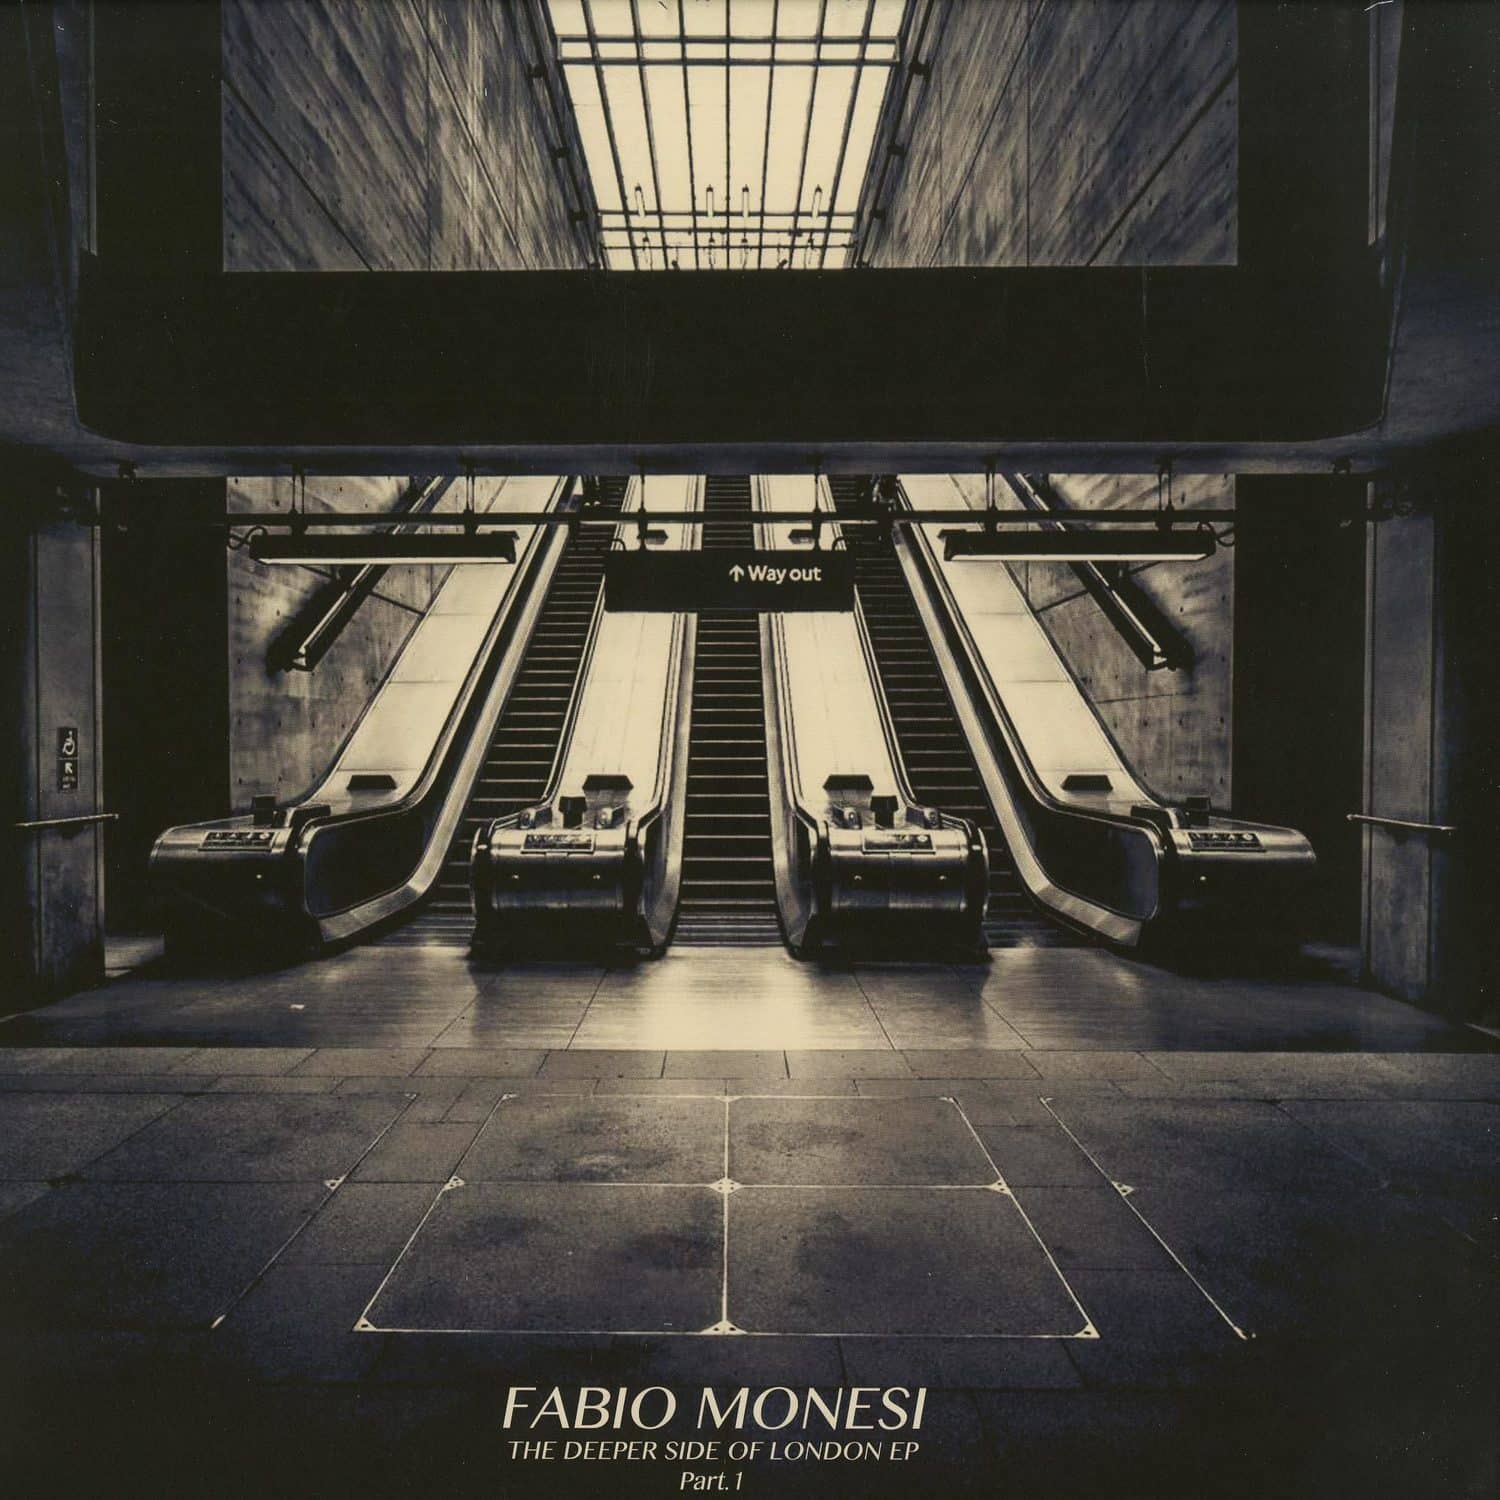 Fabio Monesi - THE DEEPER SIDE OF LONDON EP EP - PART 1 